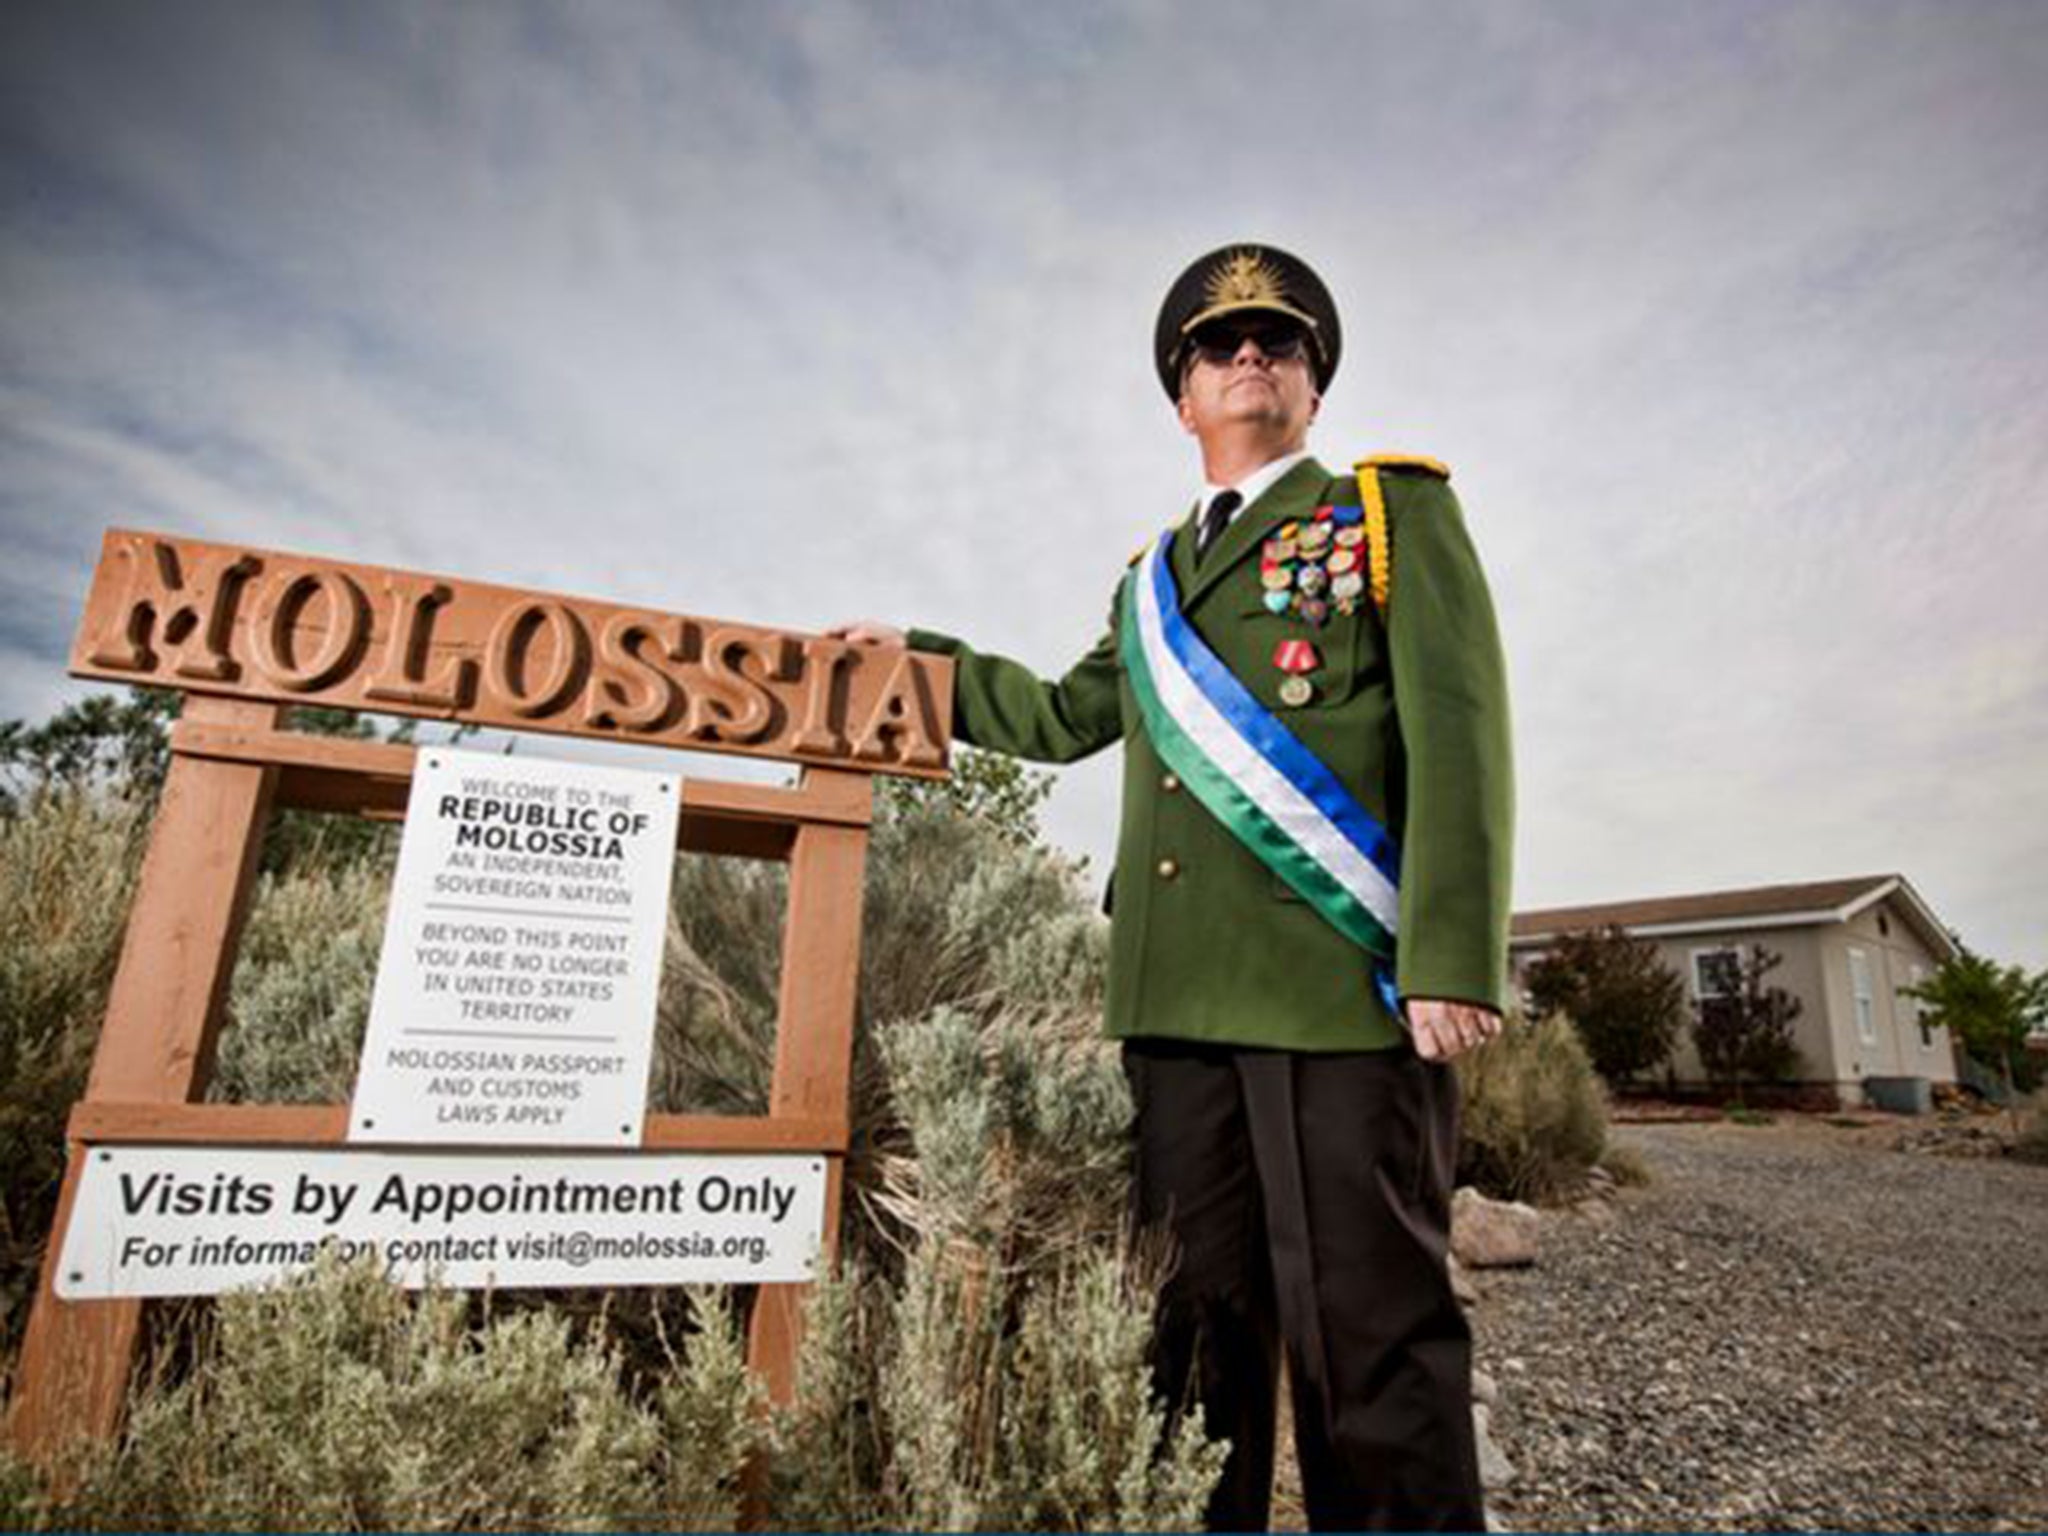 Kevin Baugh, president of Molossia, in Nevada, USA